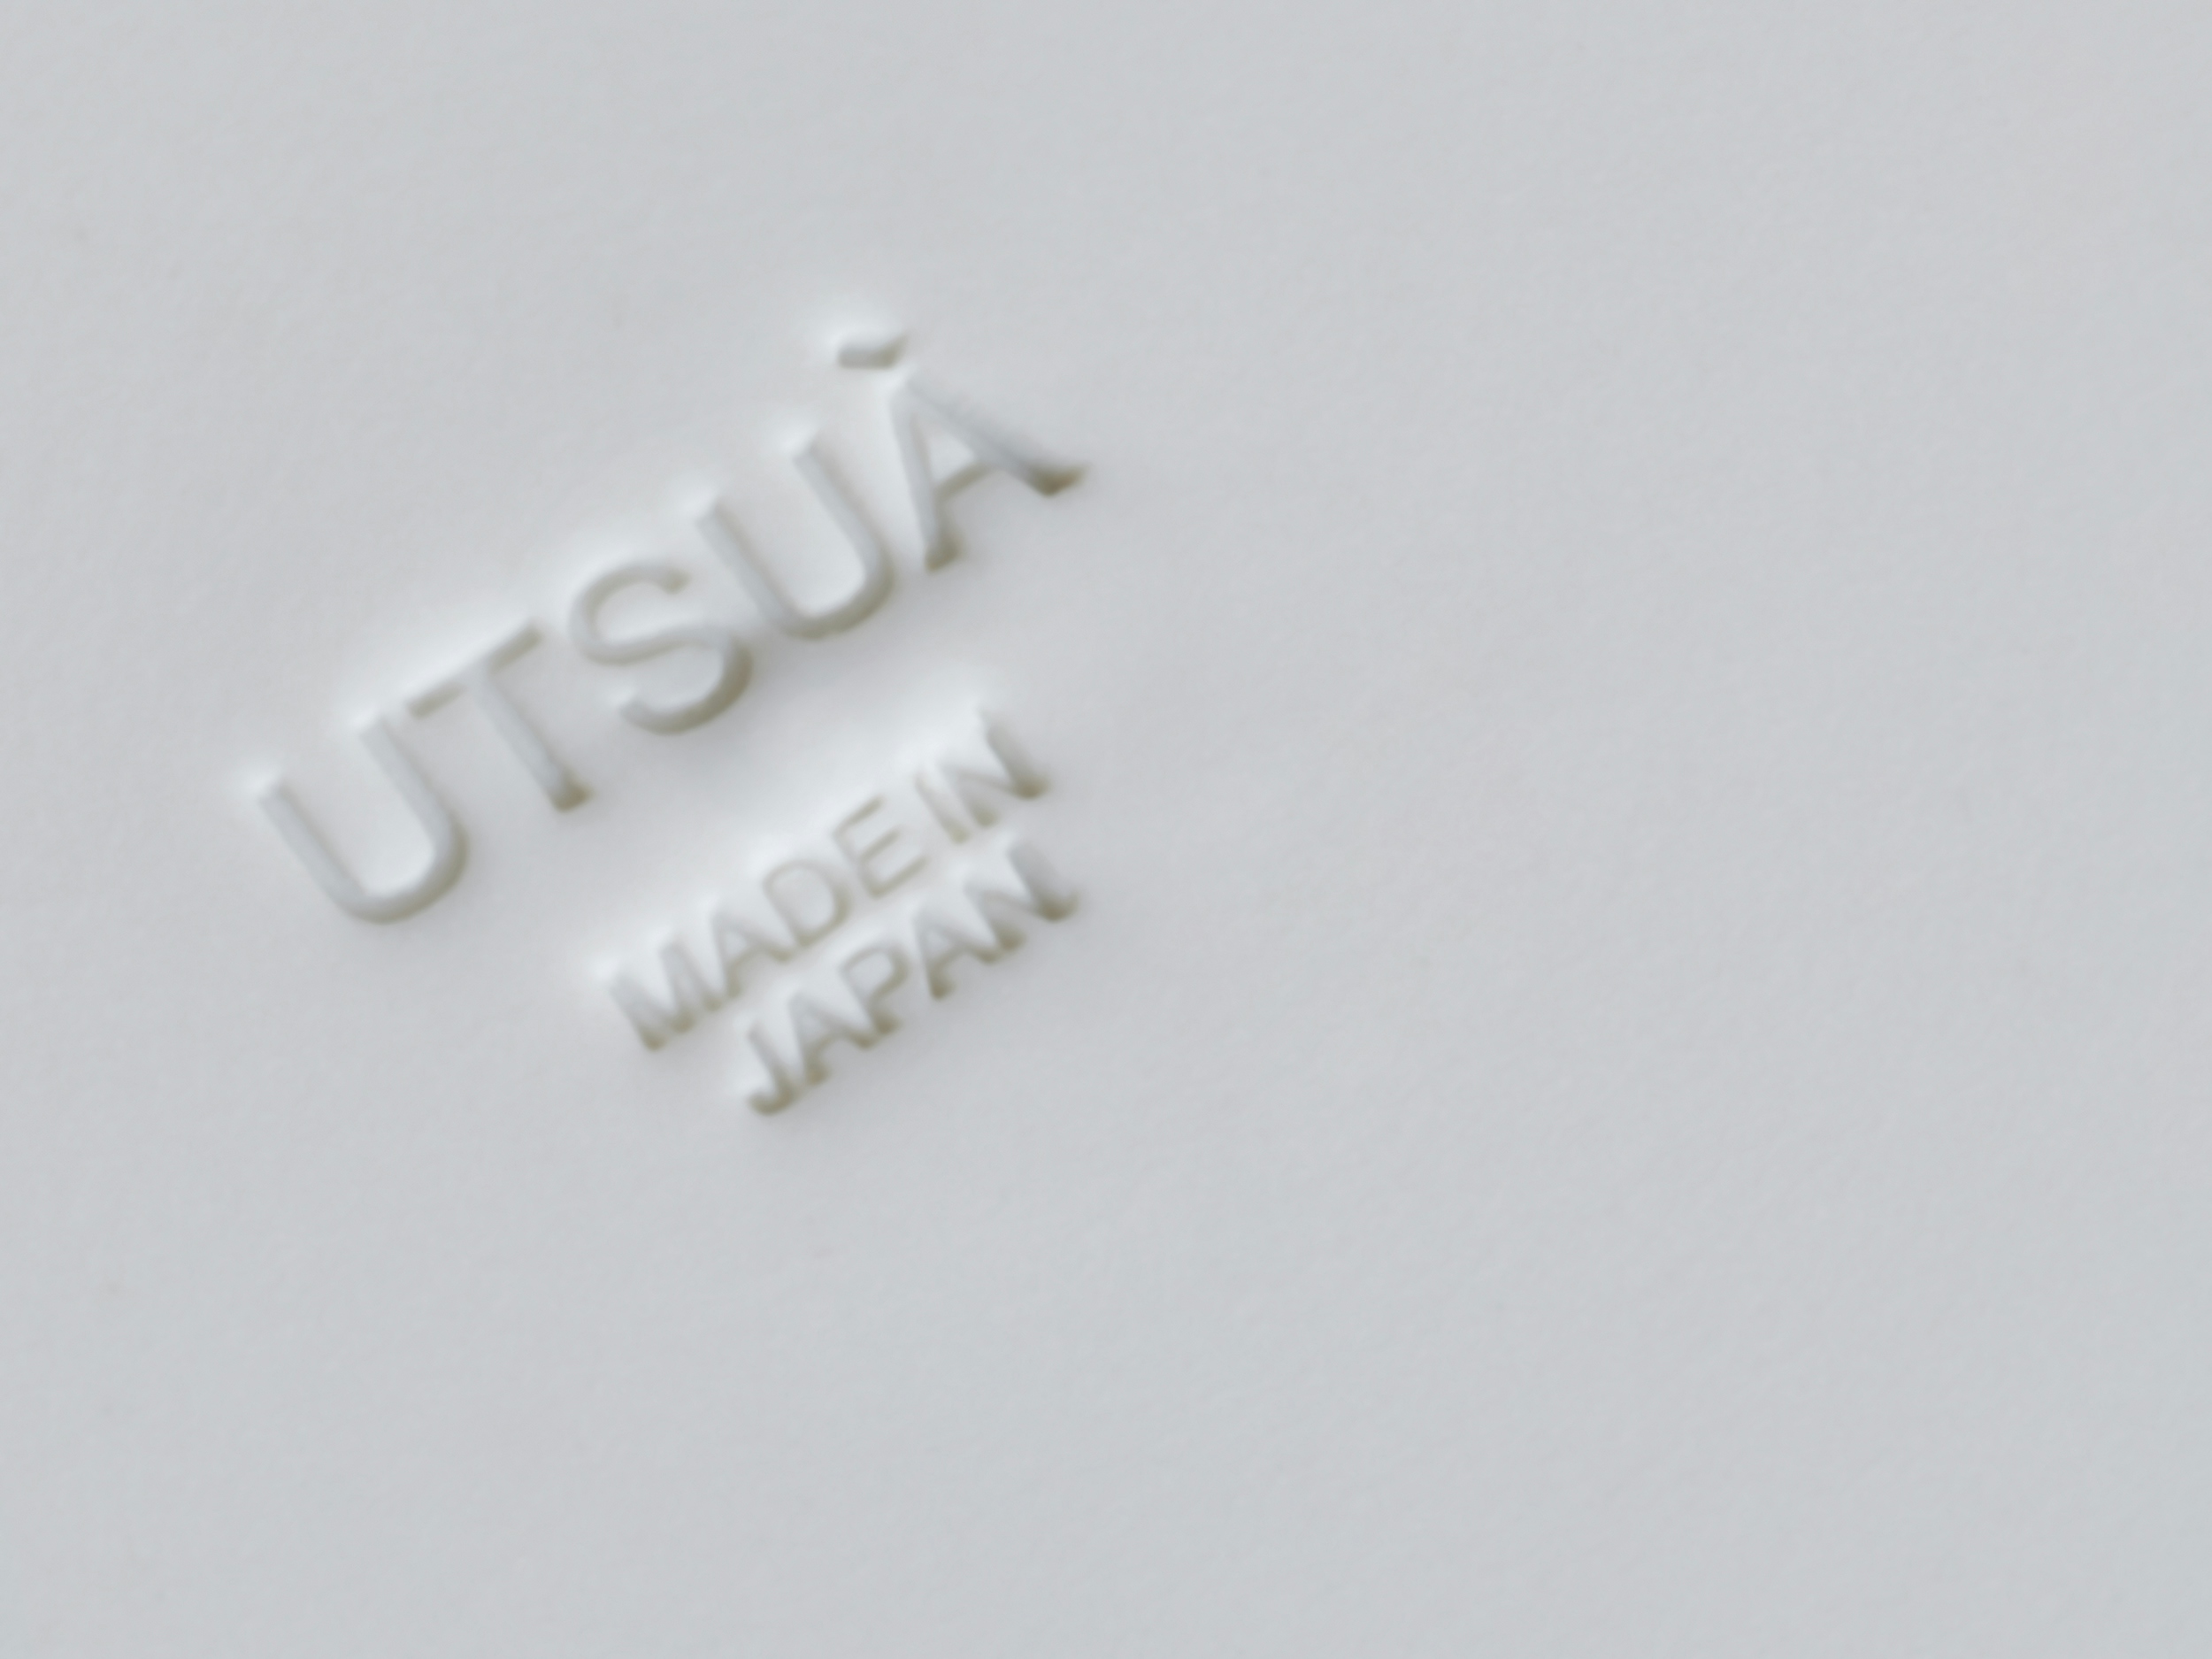 Utsua logo type applied in ceramic cup